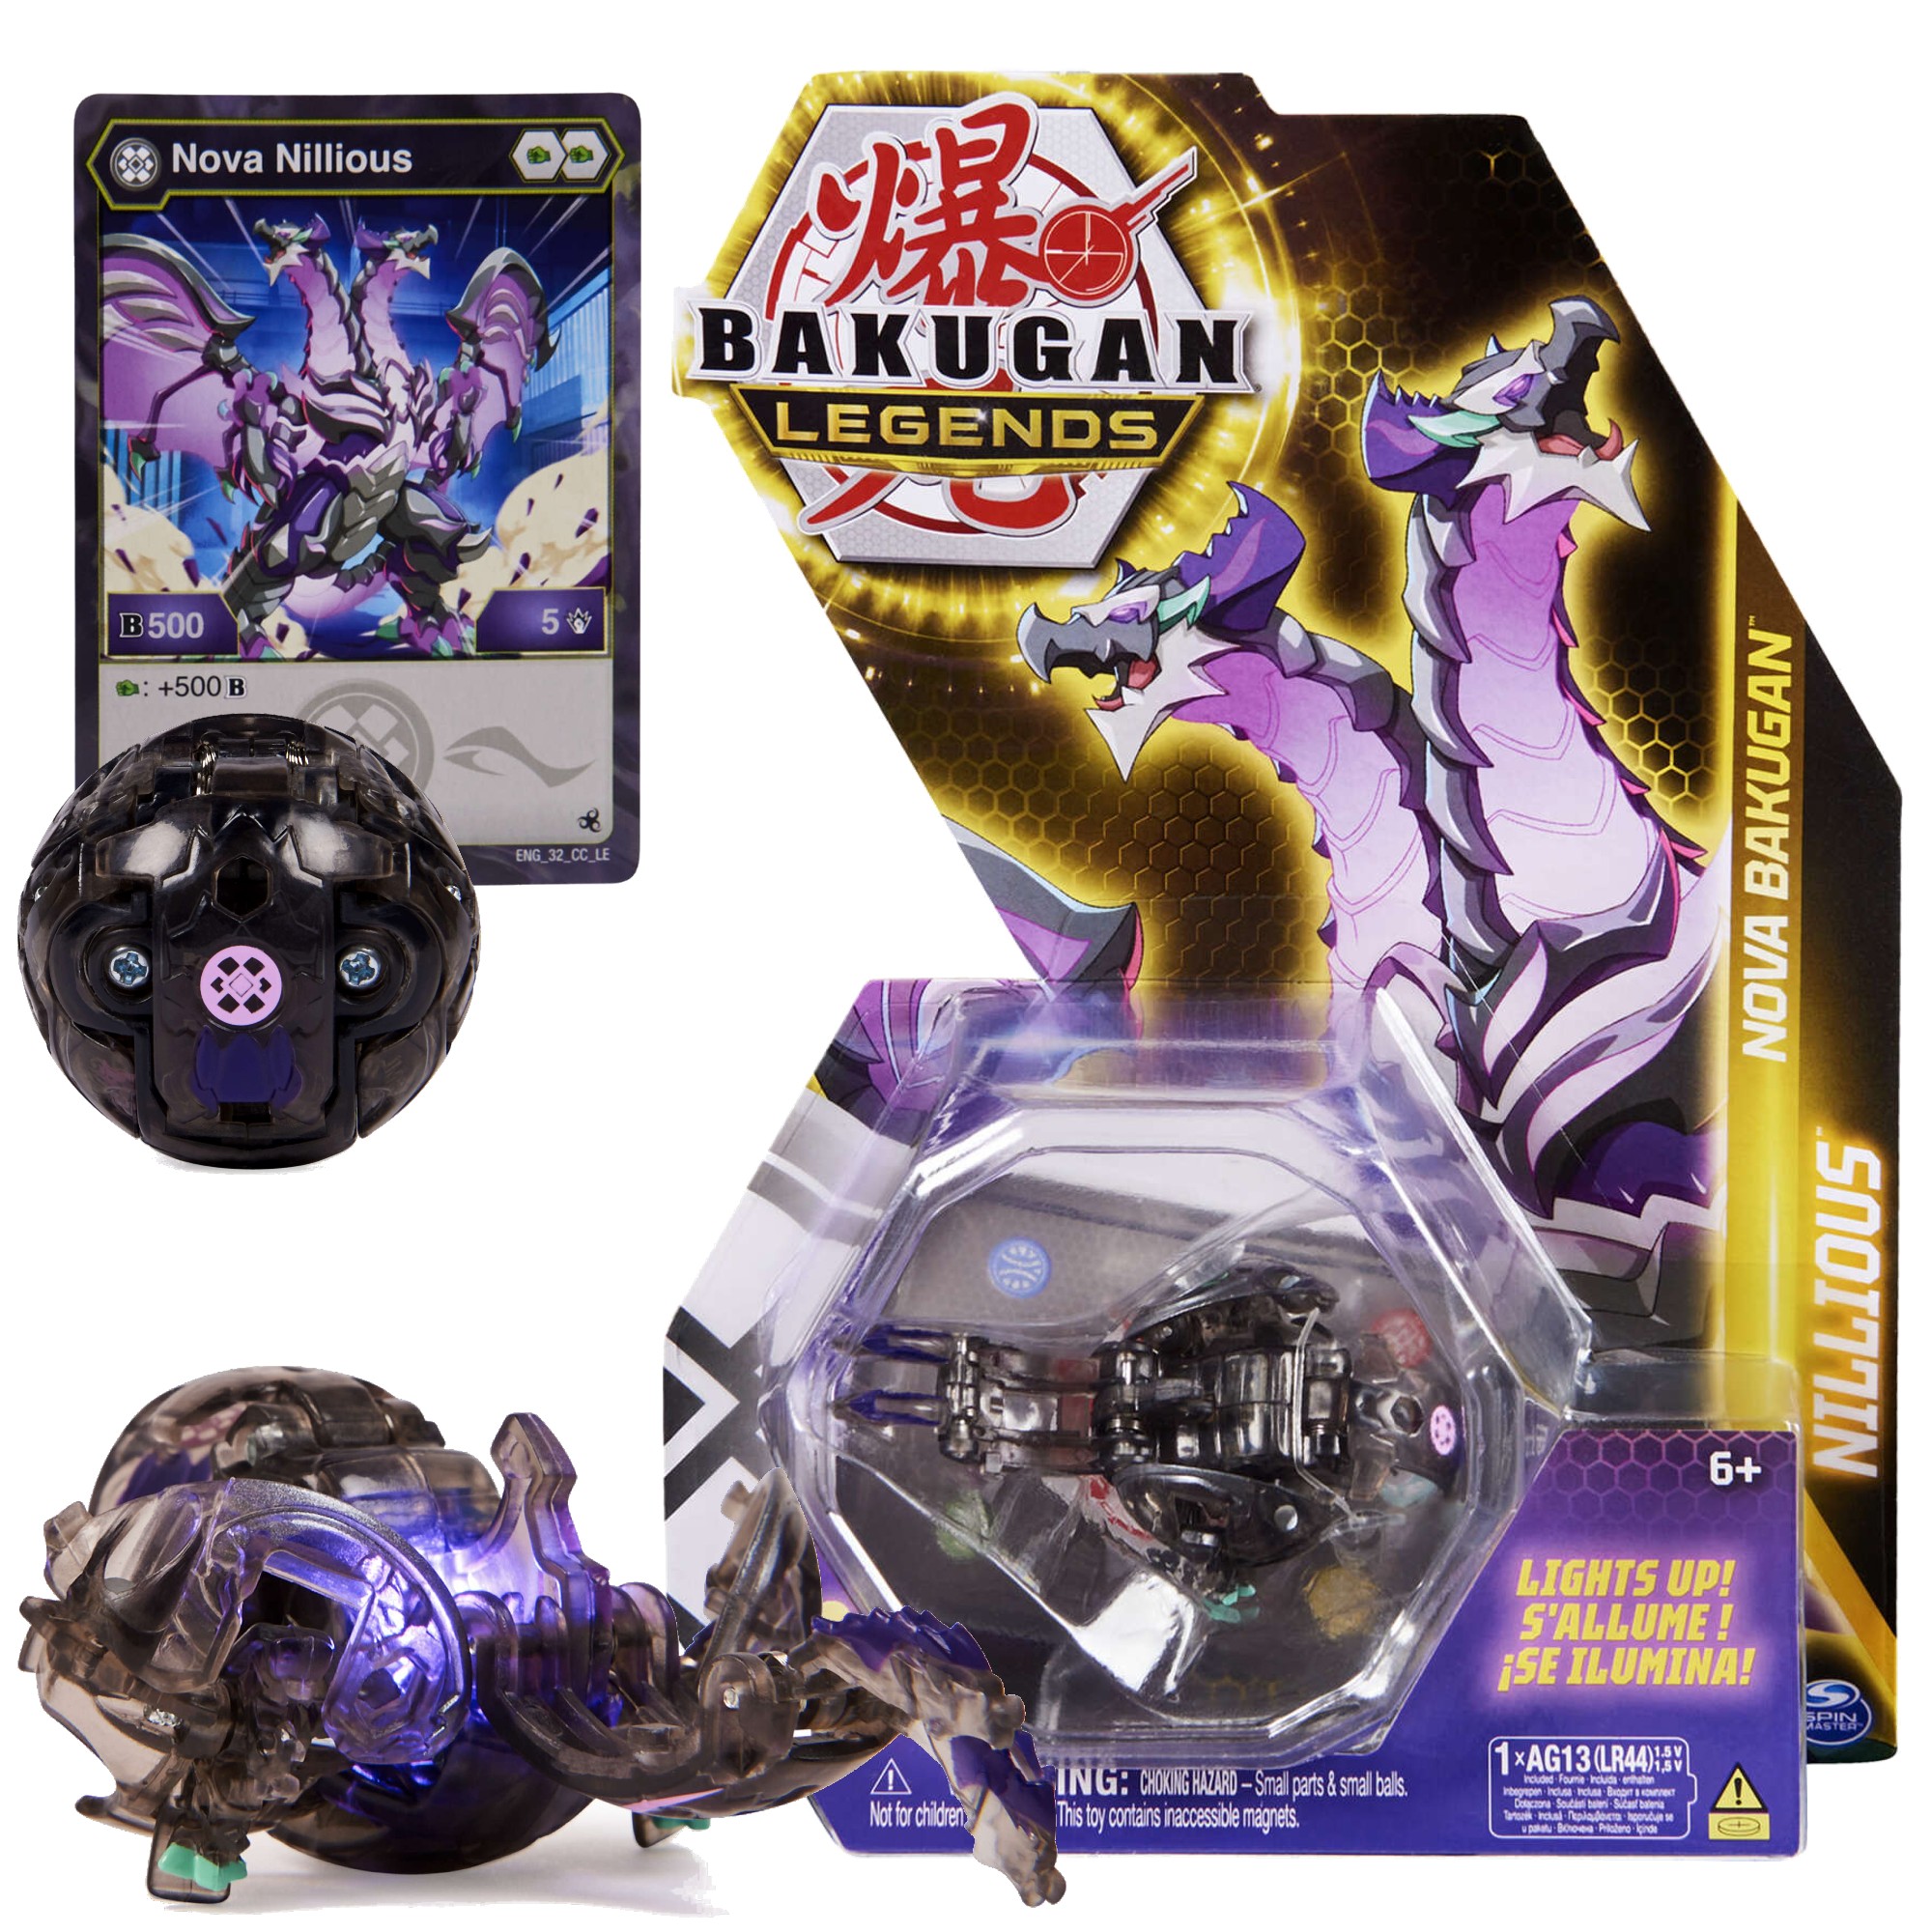 Bakugan Legends wiecca figurka Nova Nillious i karty